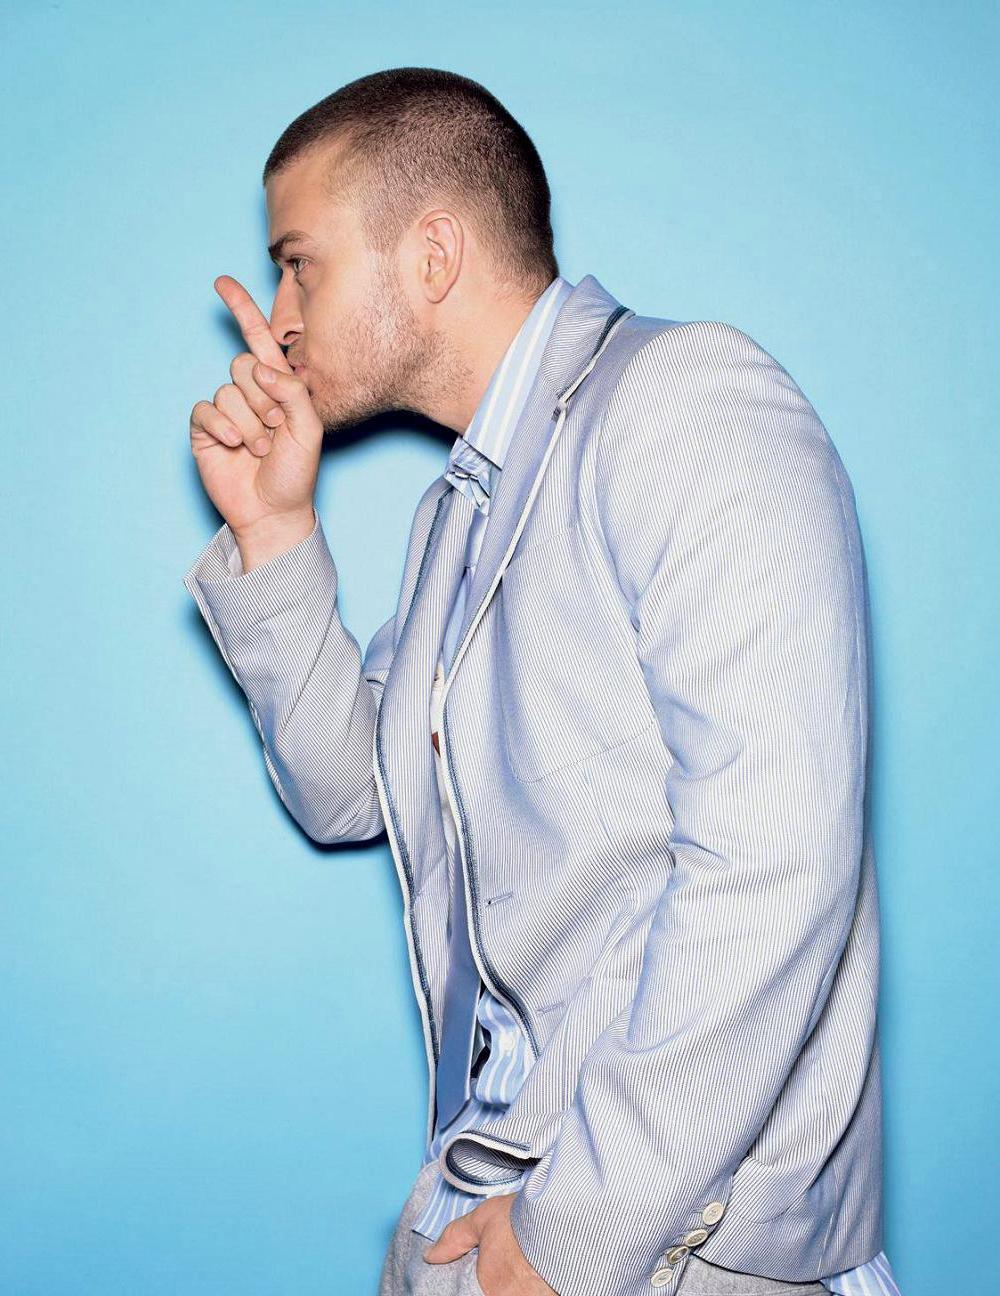 Photo №2447 Justin Timberlake.